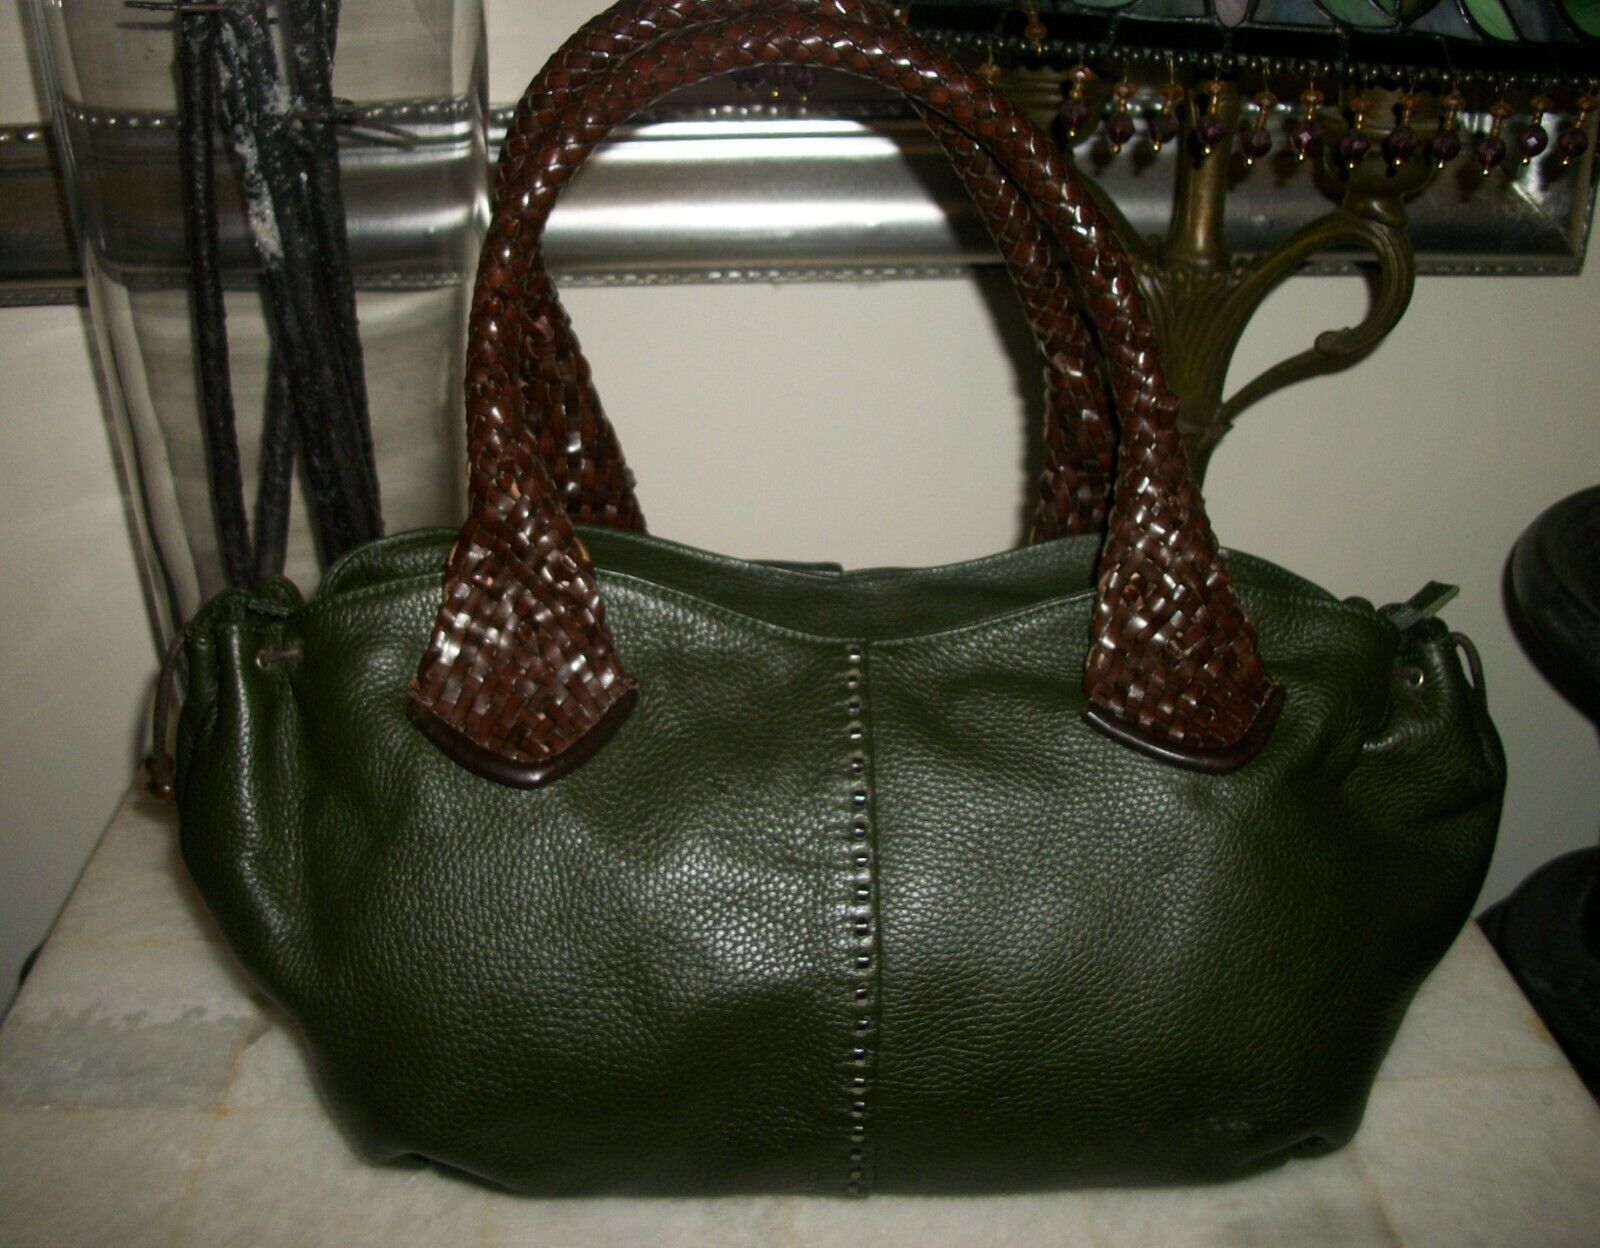  PAOLO MASI ITALY Handbag Pebbled Leather Dark Hunter Green Woven Handles $495